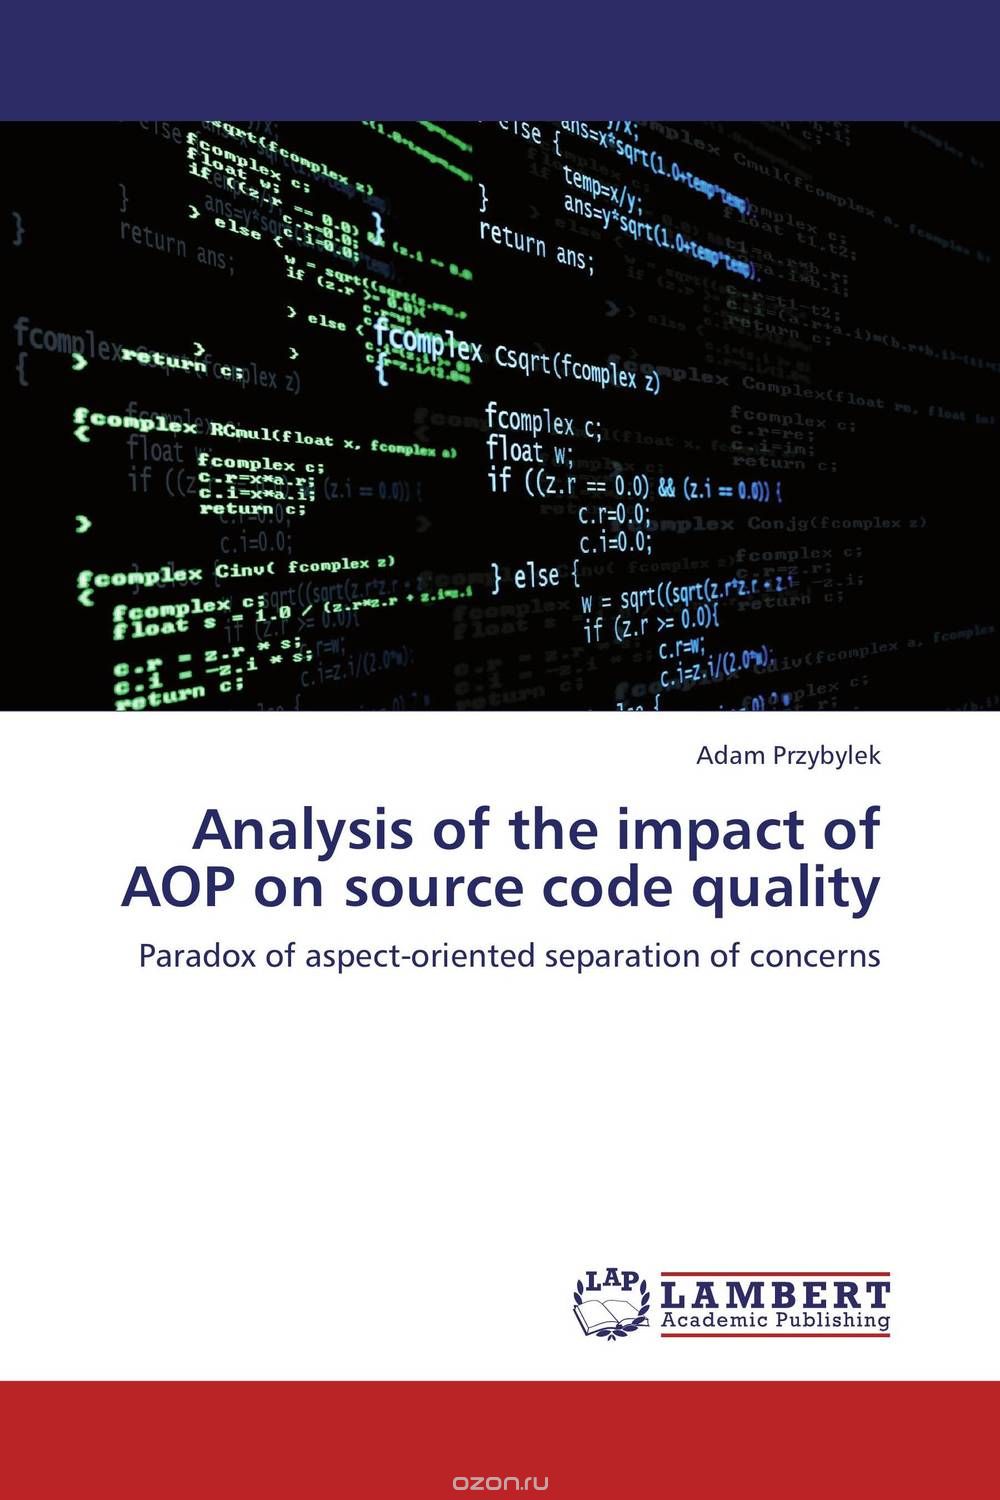 Скачать книгу "Analysis of the impact of AOP on source code quality, Adam Przybylek"